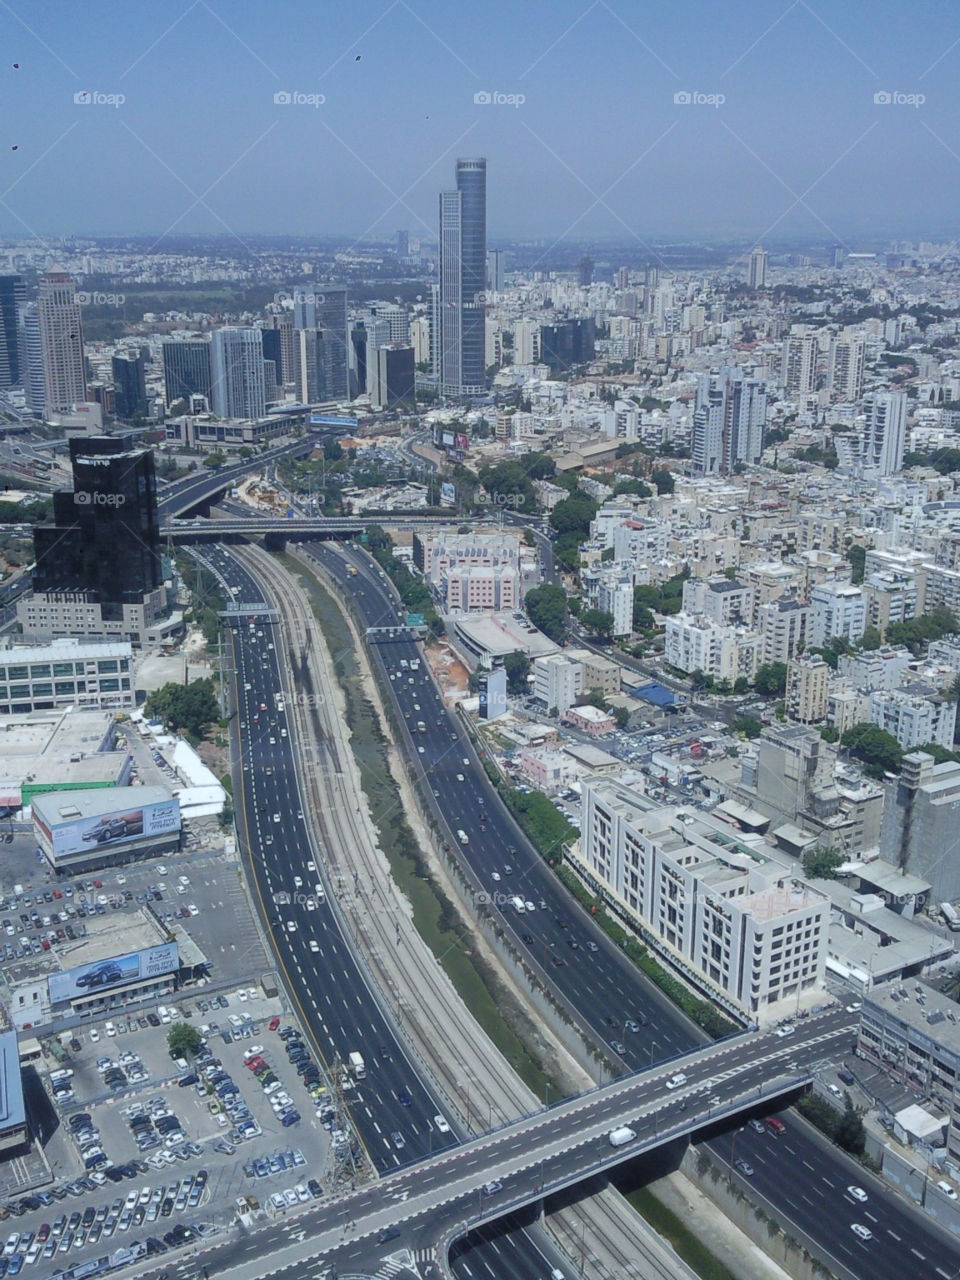 tel-aviv israel buildings cars skyscraper by Evanosaur